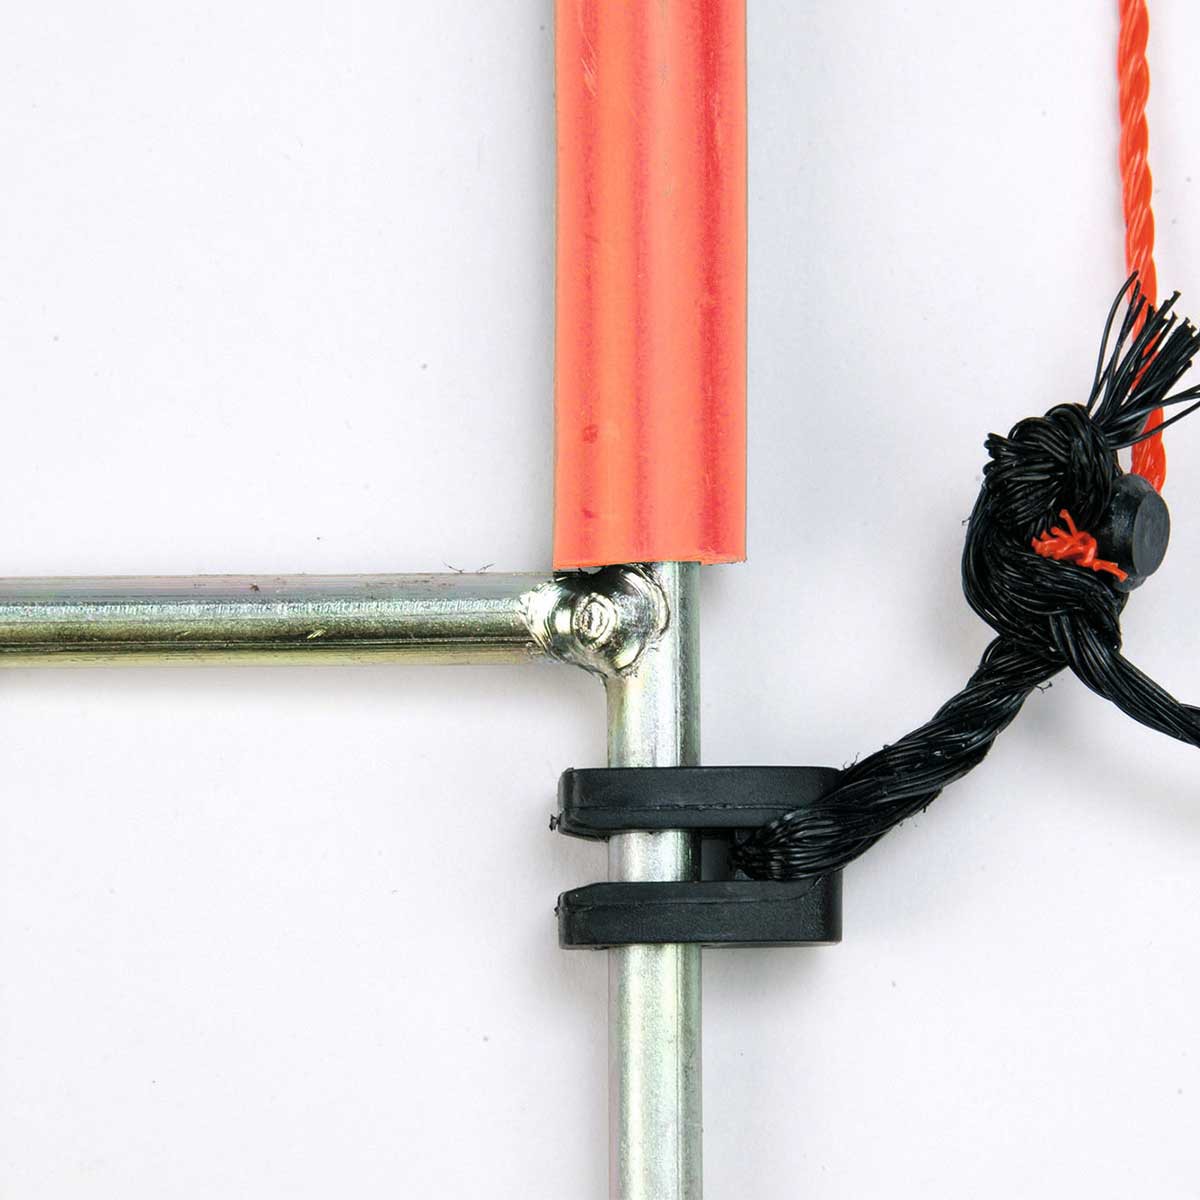 Agrarzone Sheep Net electrificable, double tip, orange 50 m x 90 cm